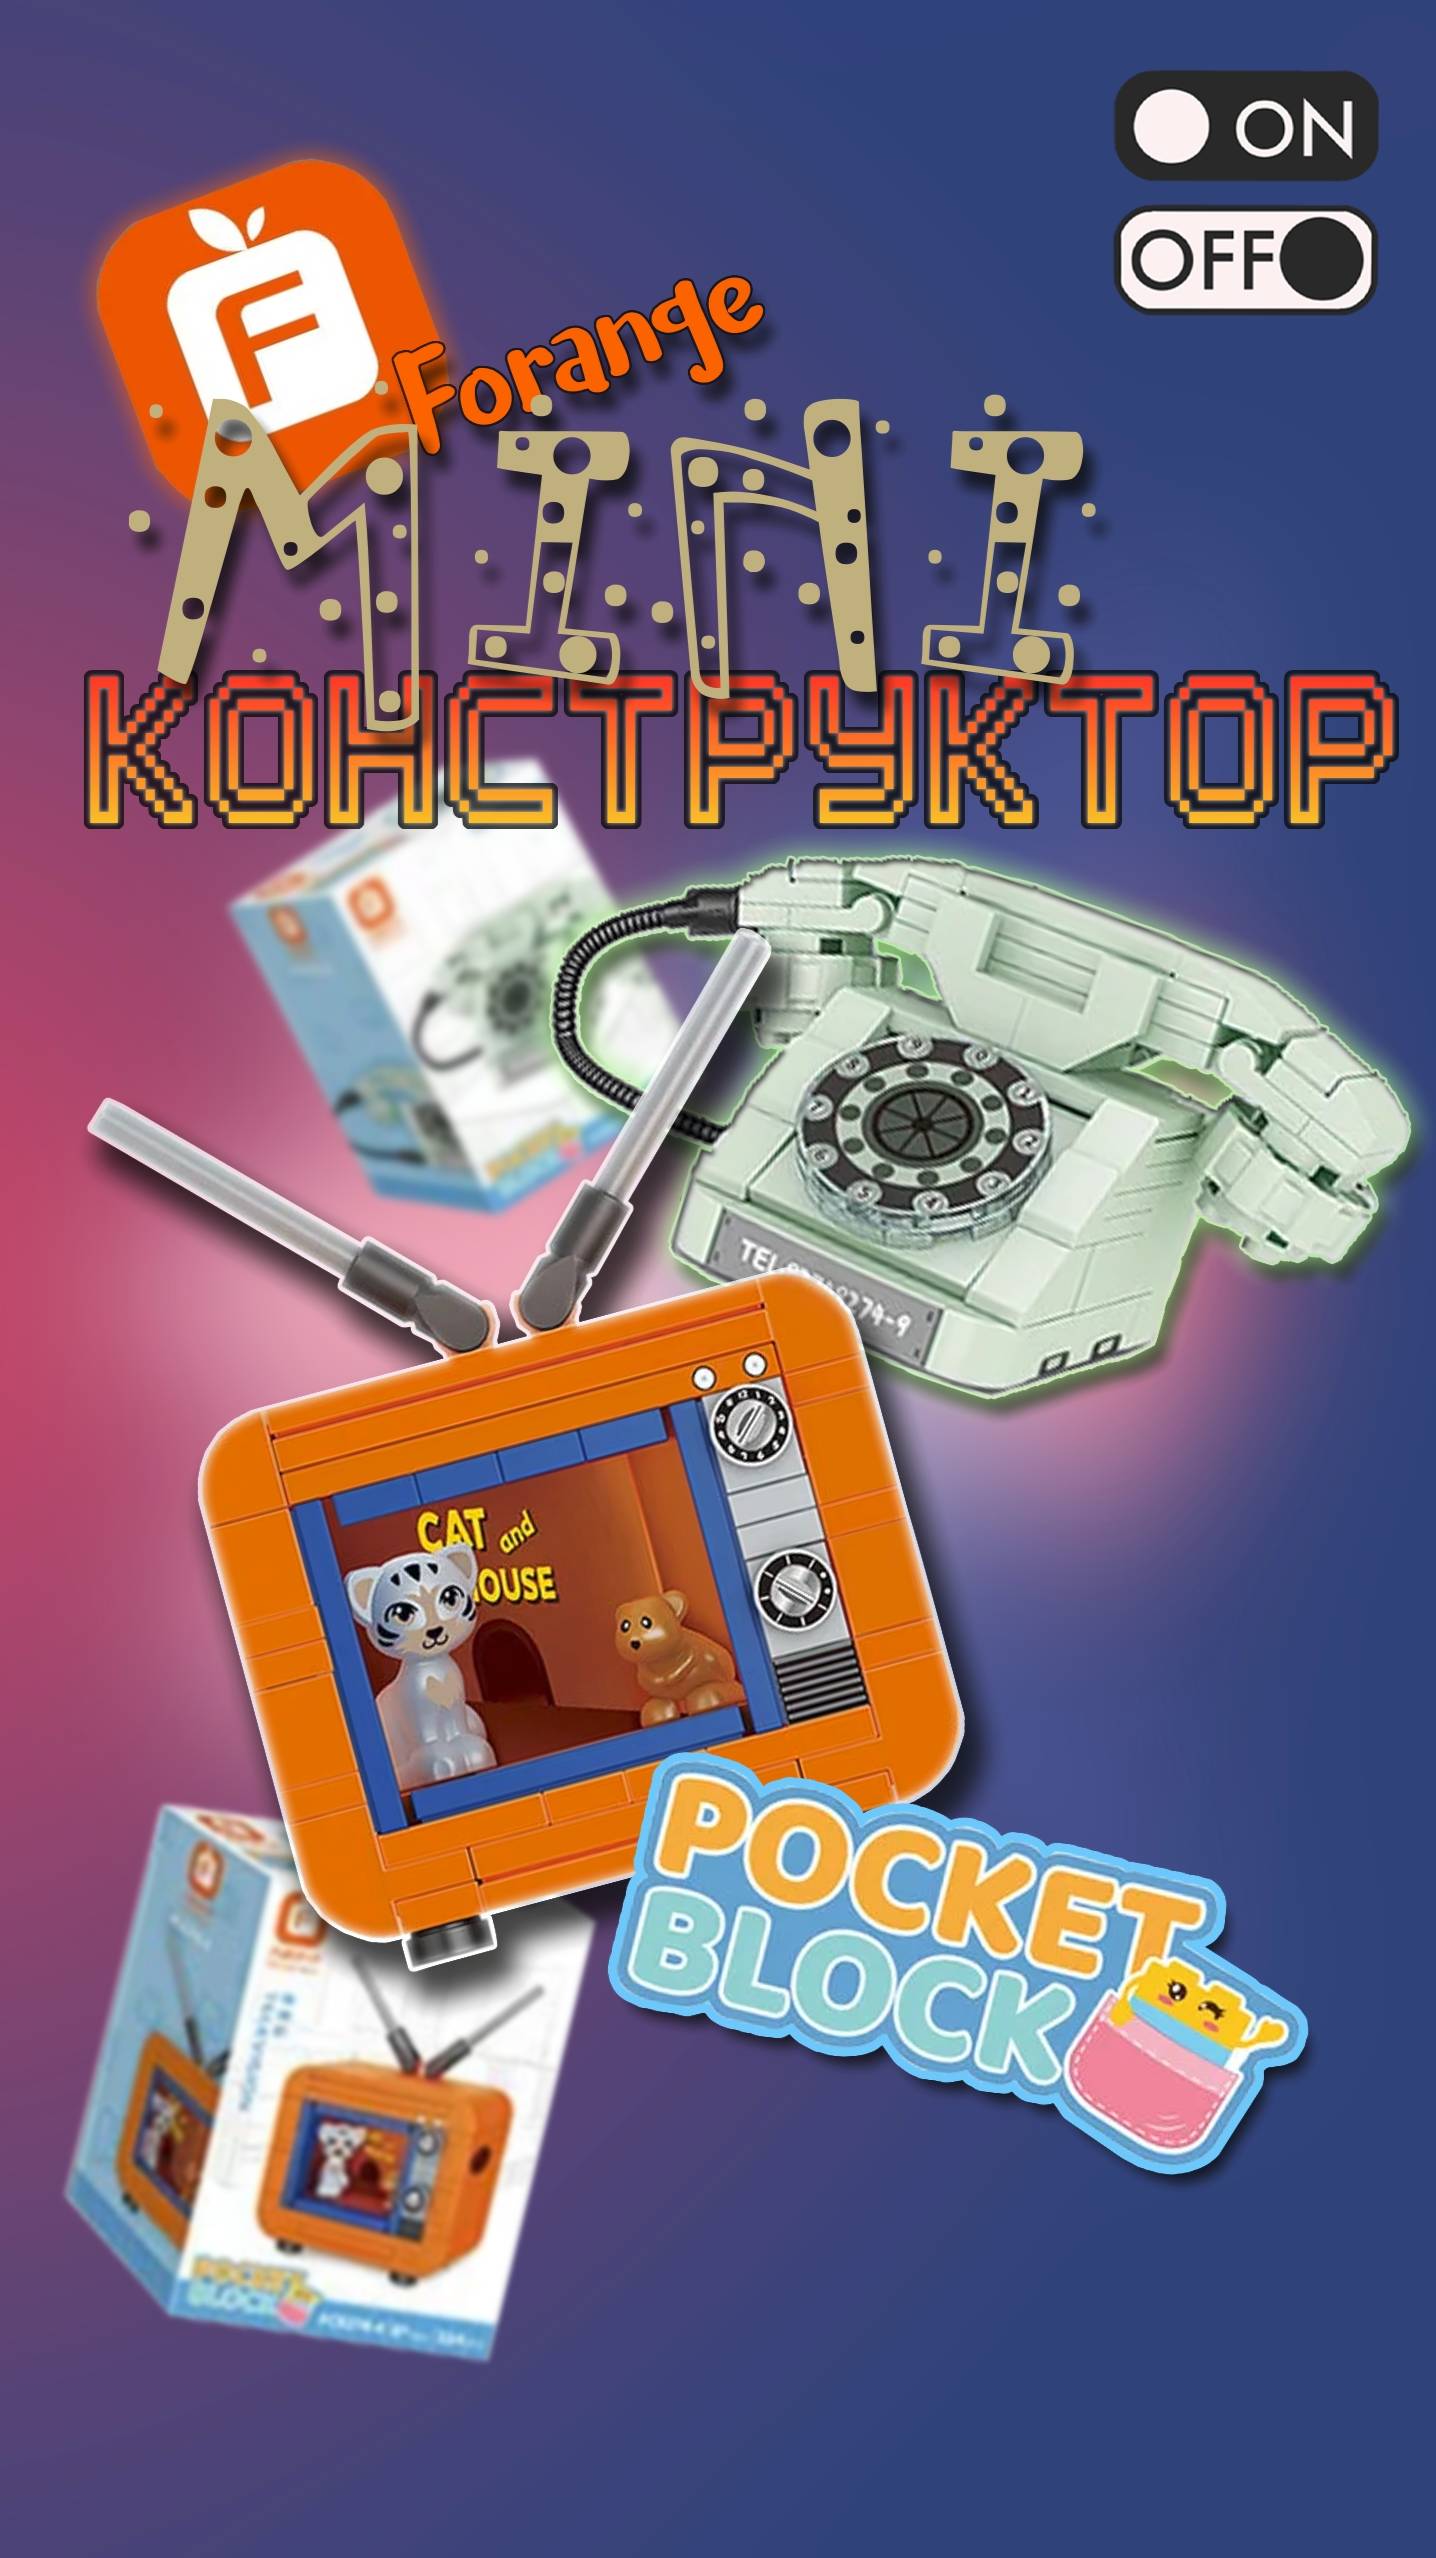 Pocket Block Forange Мини Констрктор + TV + Telephone + ASMR